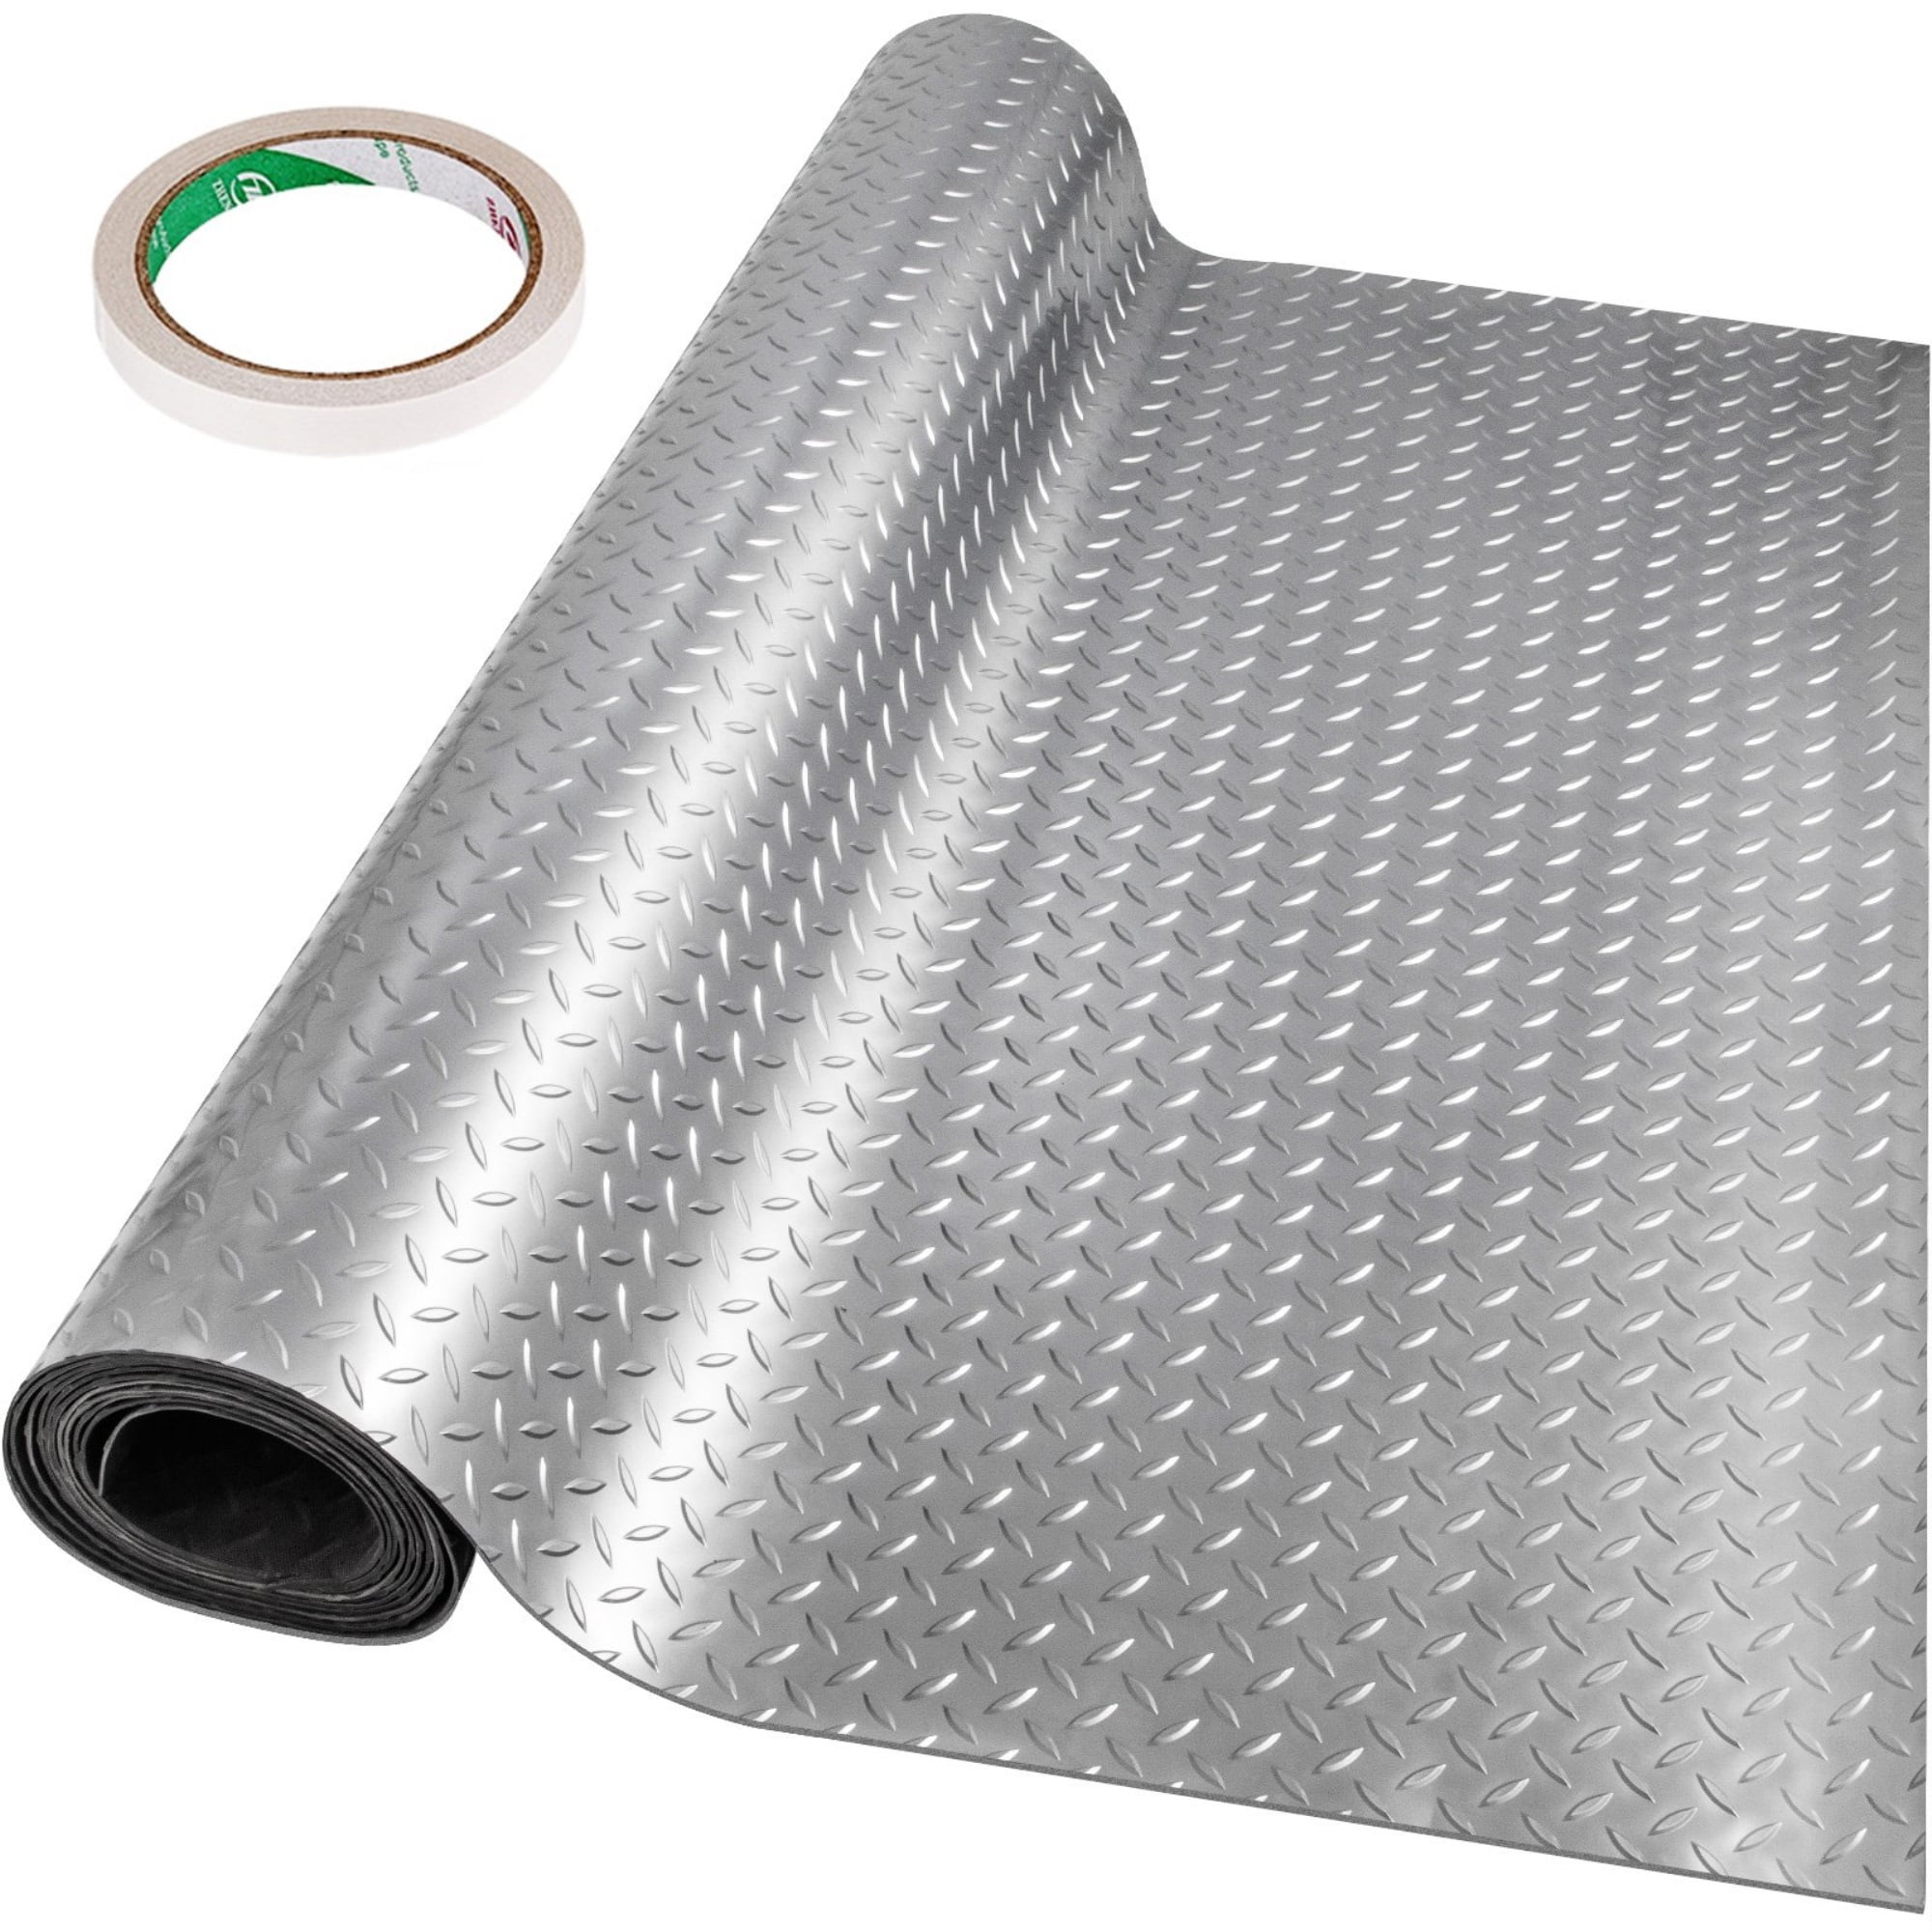 Non Slip Mini Hole Rubber Mat in Roll form for Slip resistance